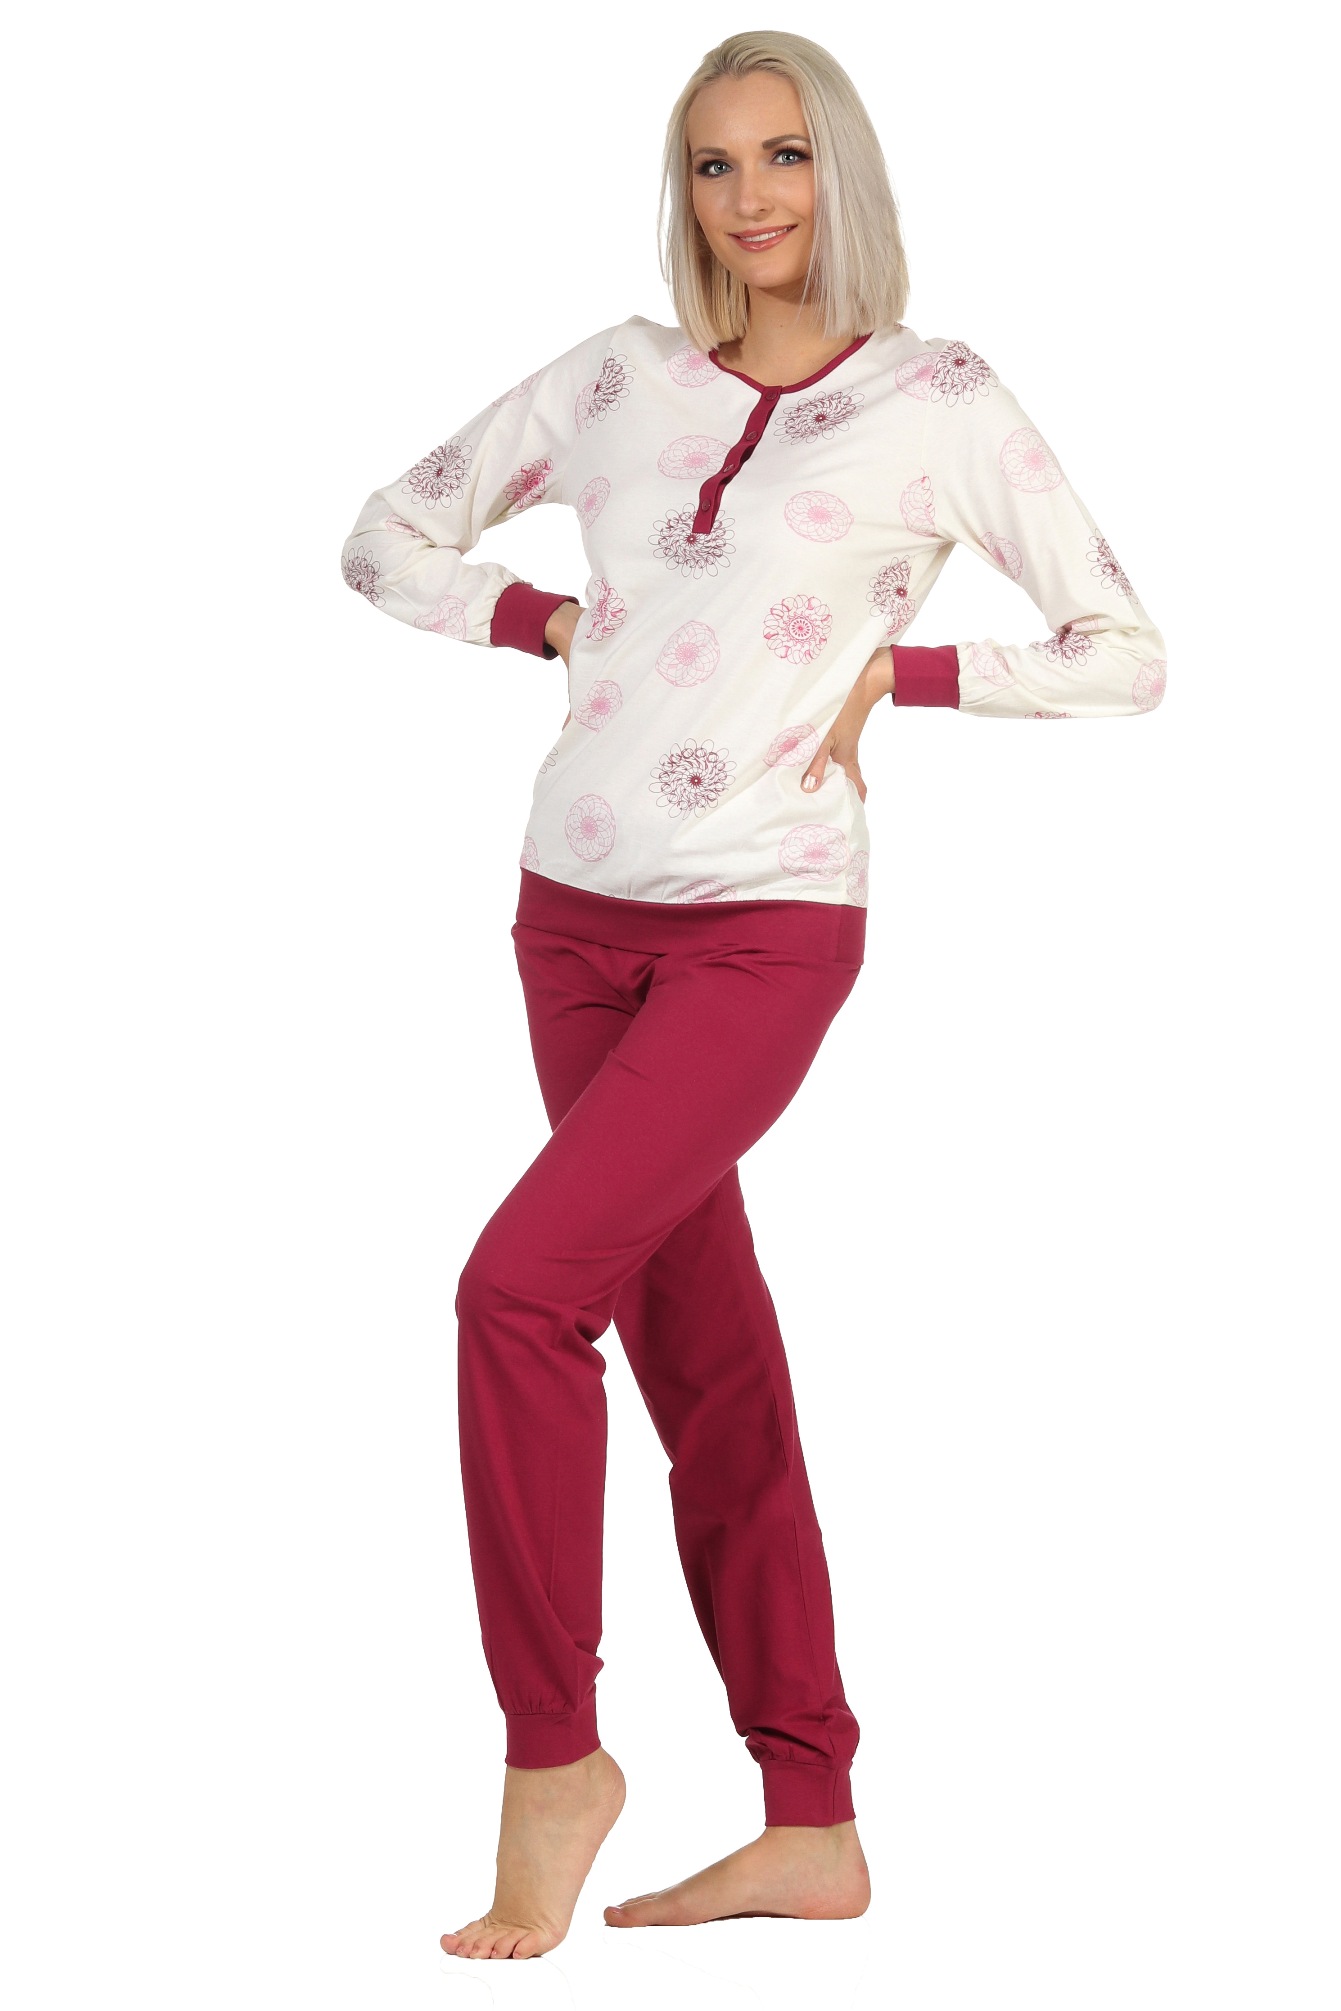 Edler Damen Schlafanzug langarm Pyjama mit Bündchen - 202 201 10 105